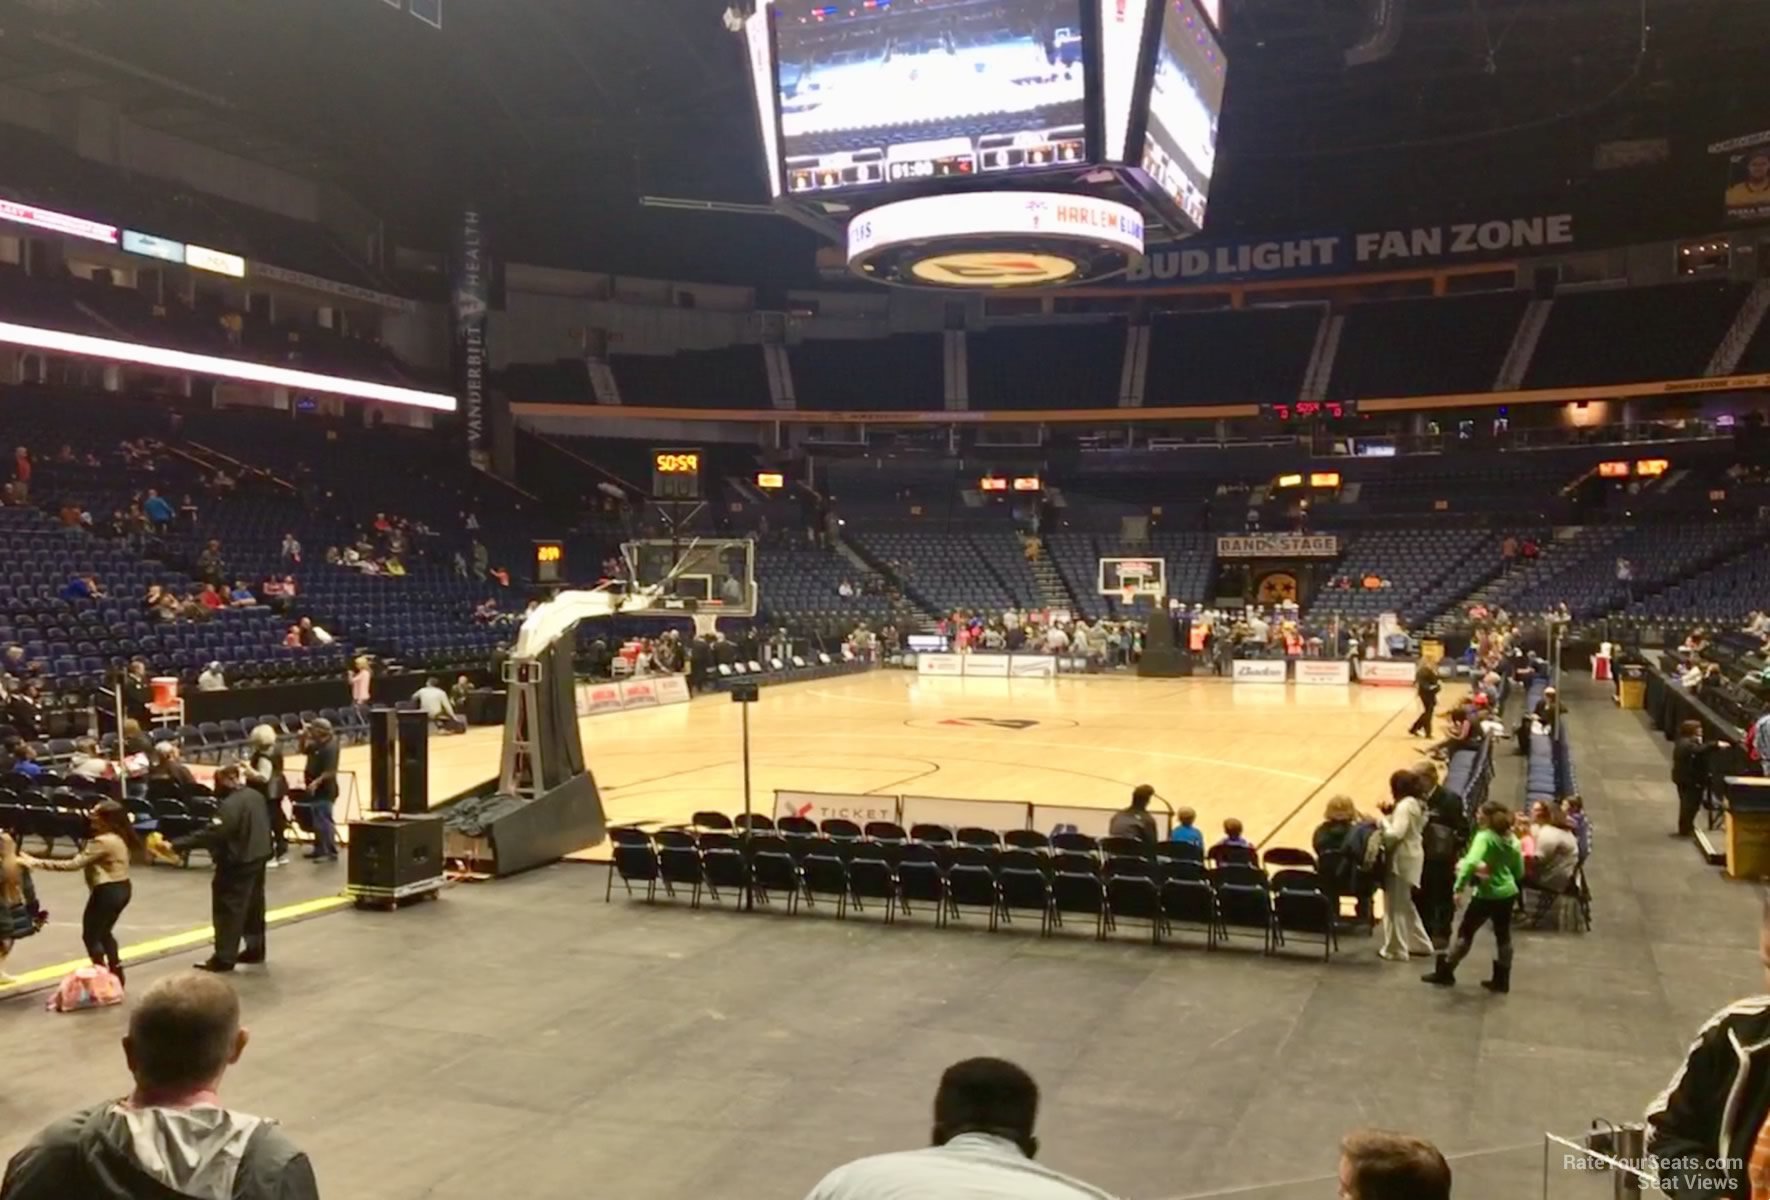 section 102, row gg seat view  for basketball - bridgestone arena